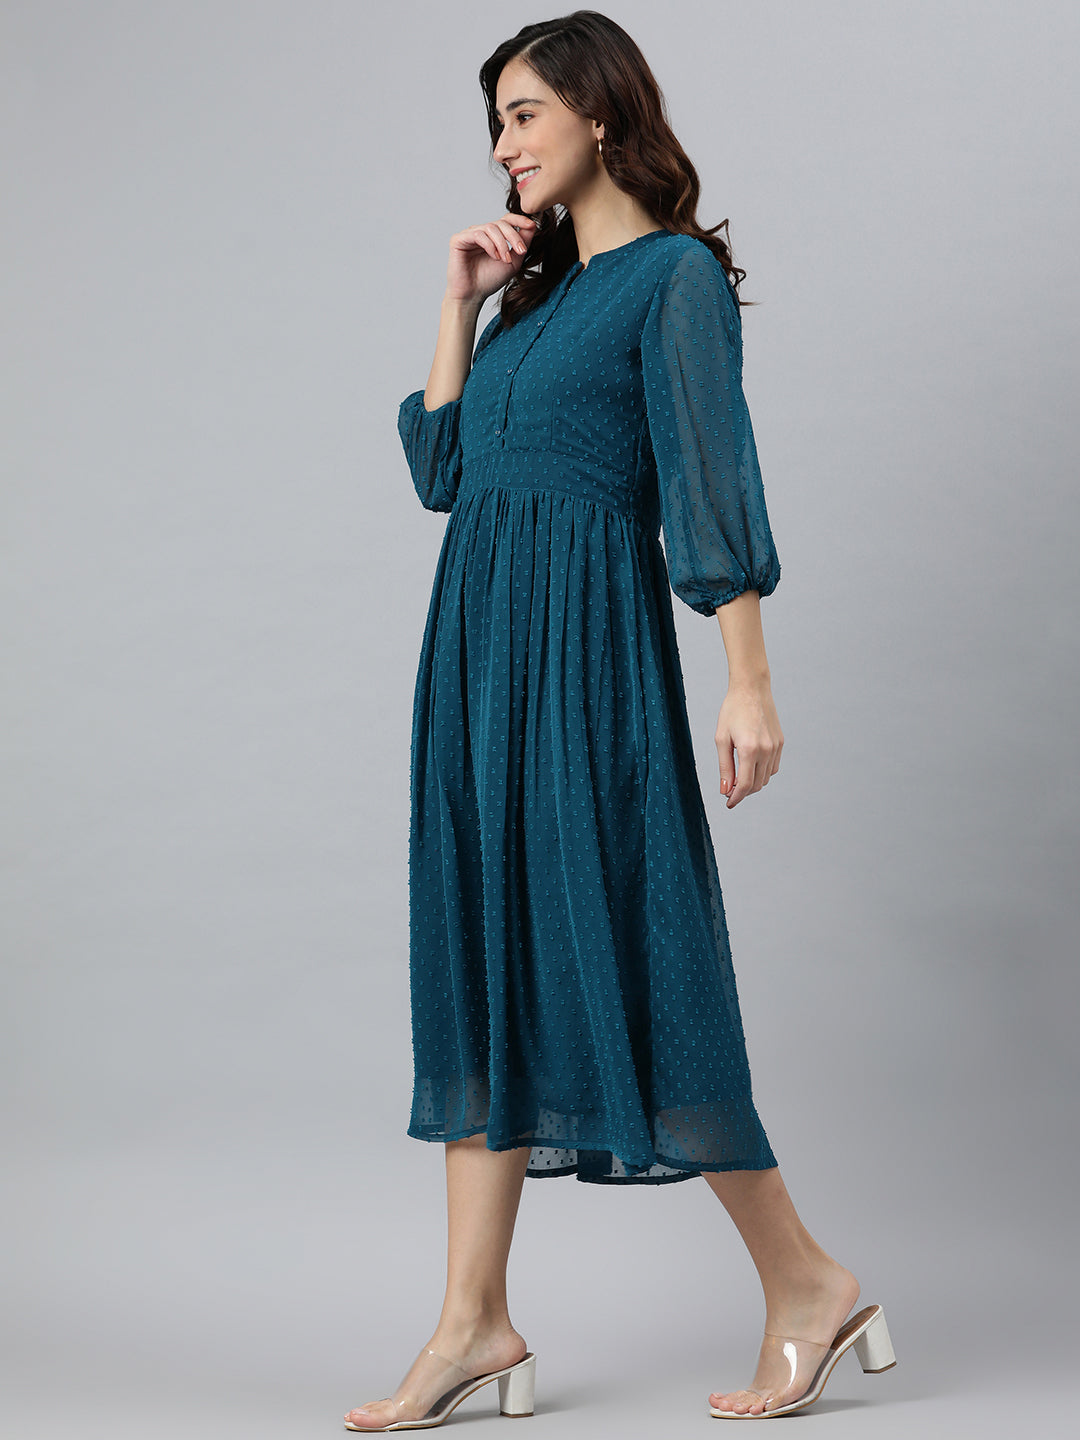 Women's Self Design Teal Poly Chiffon Dress - Janasya USA